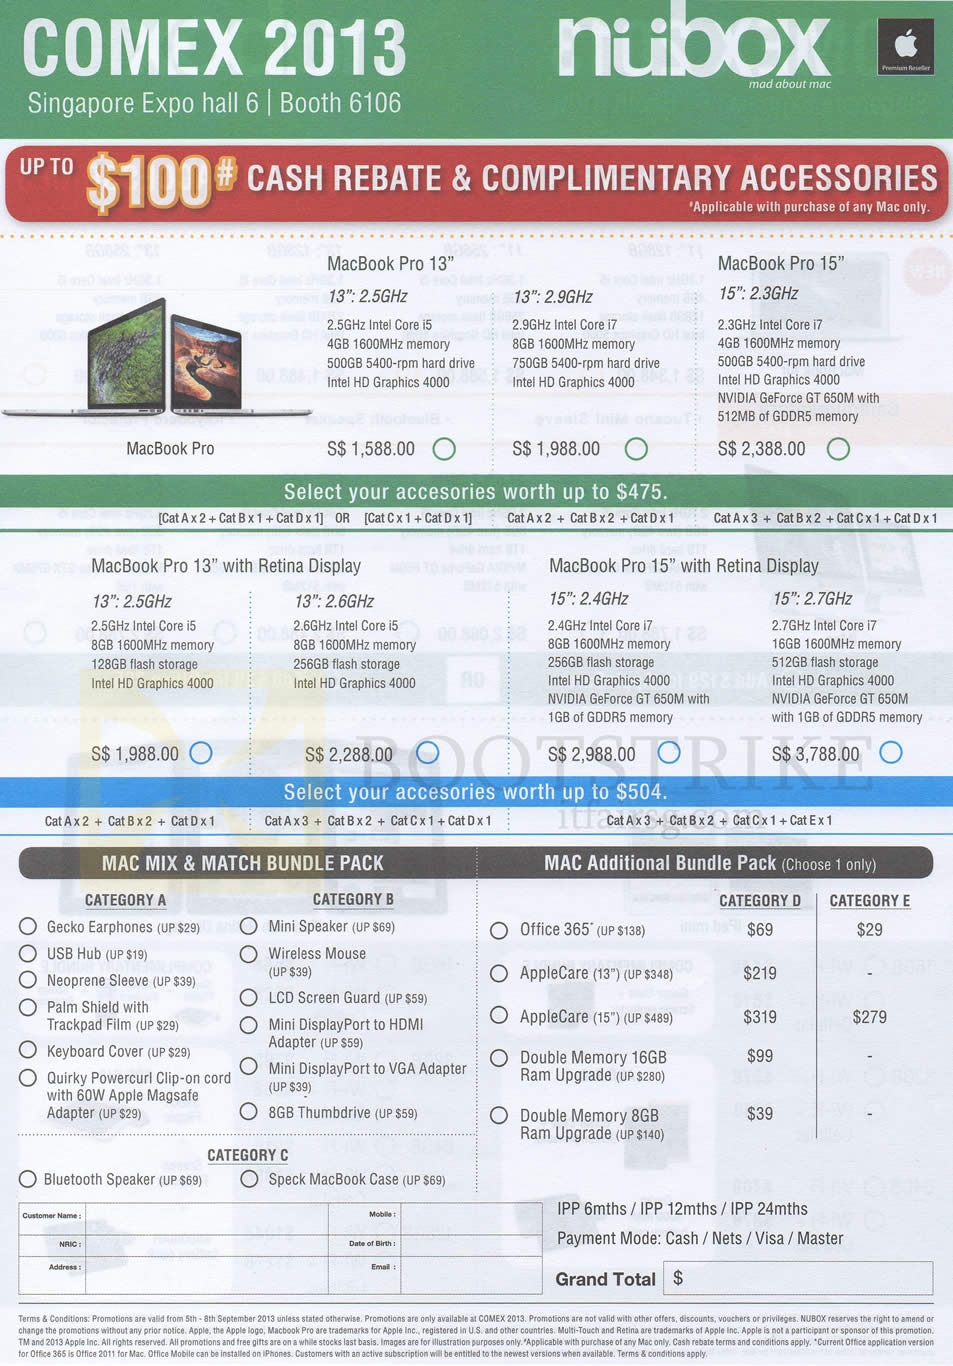 COMEX 2013 price list image brochure of Nubox Apple Macbook Pro Notebooks, Bundle Packs